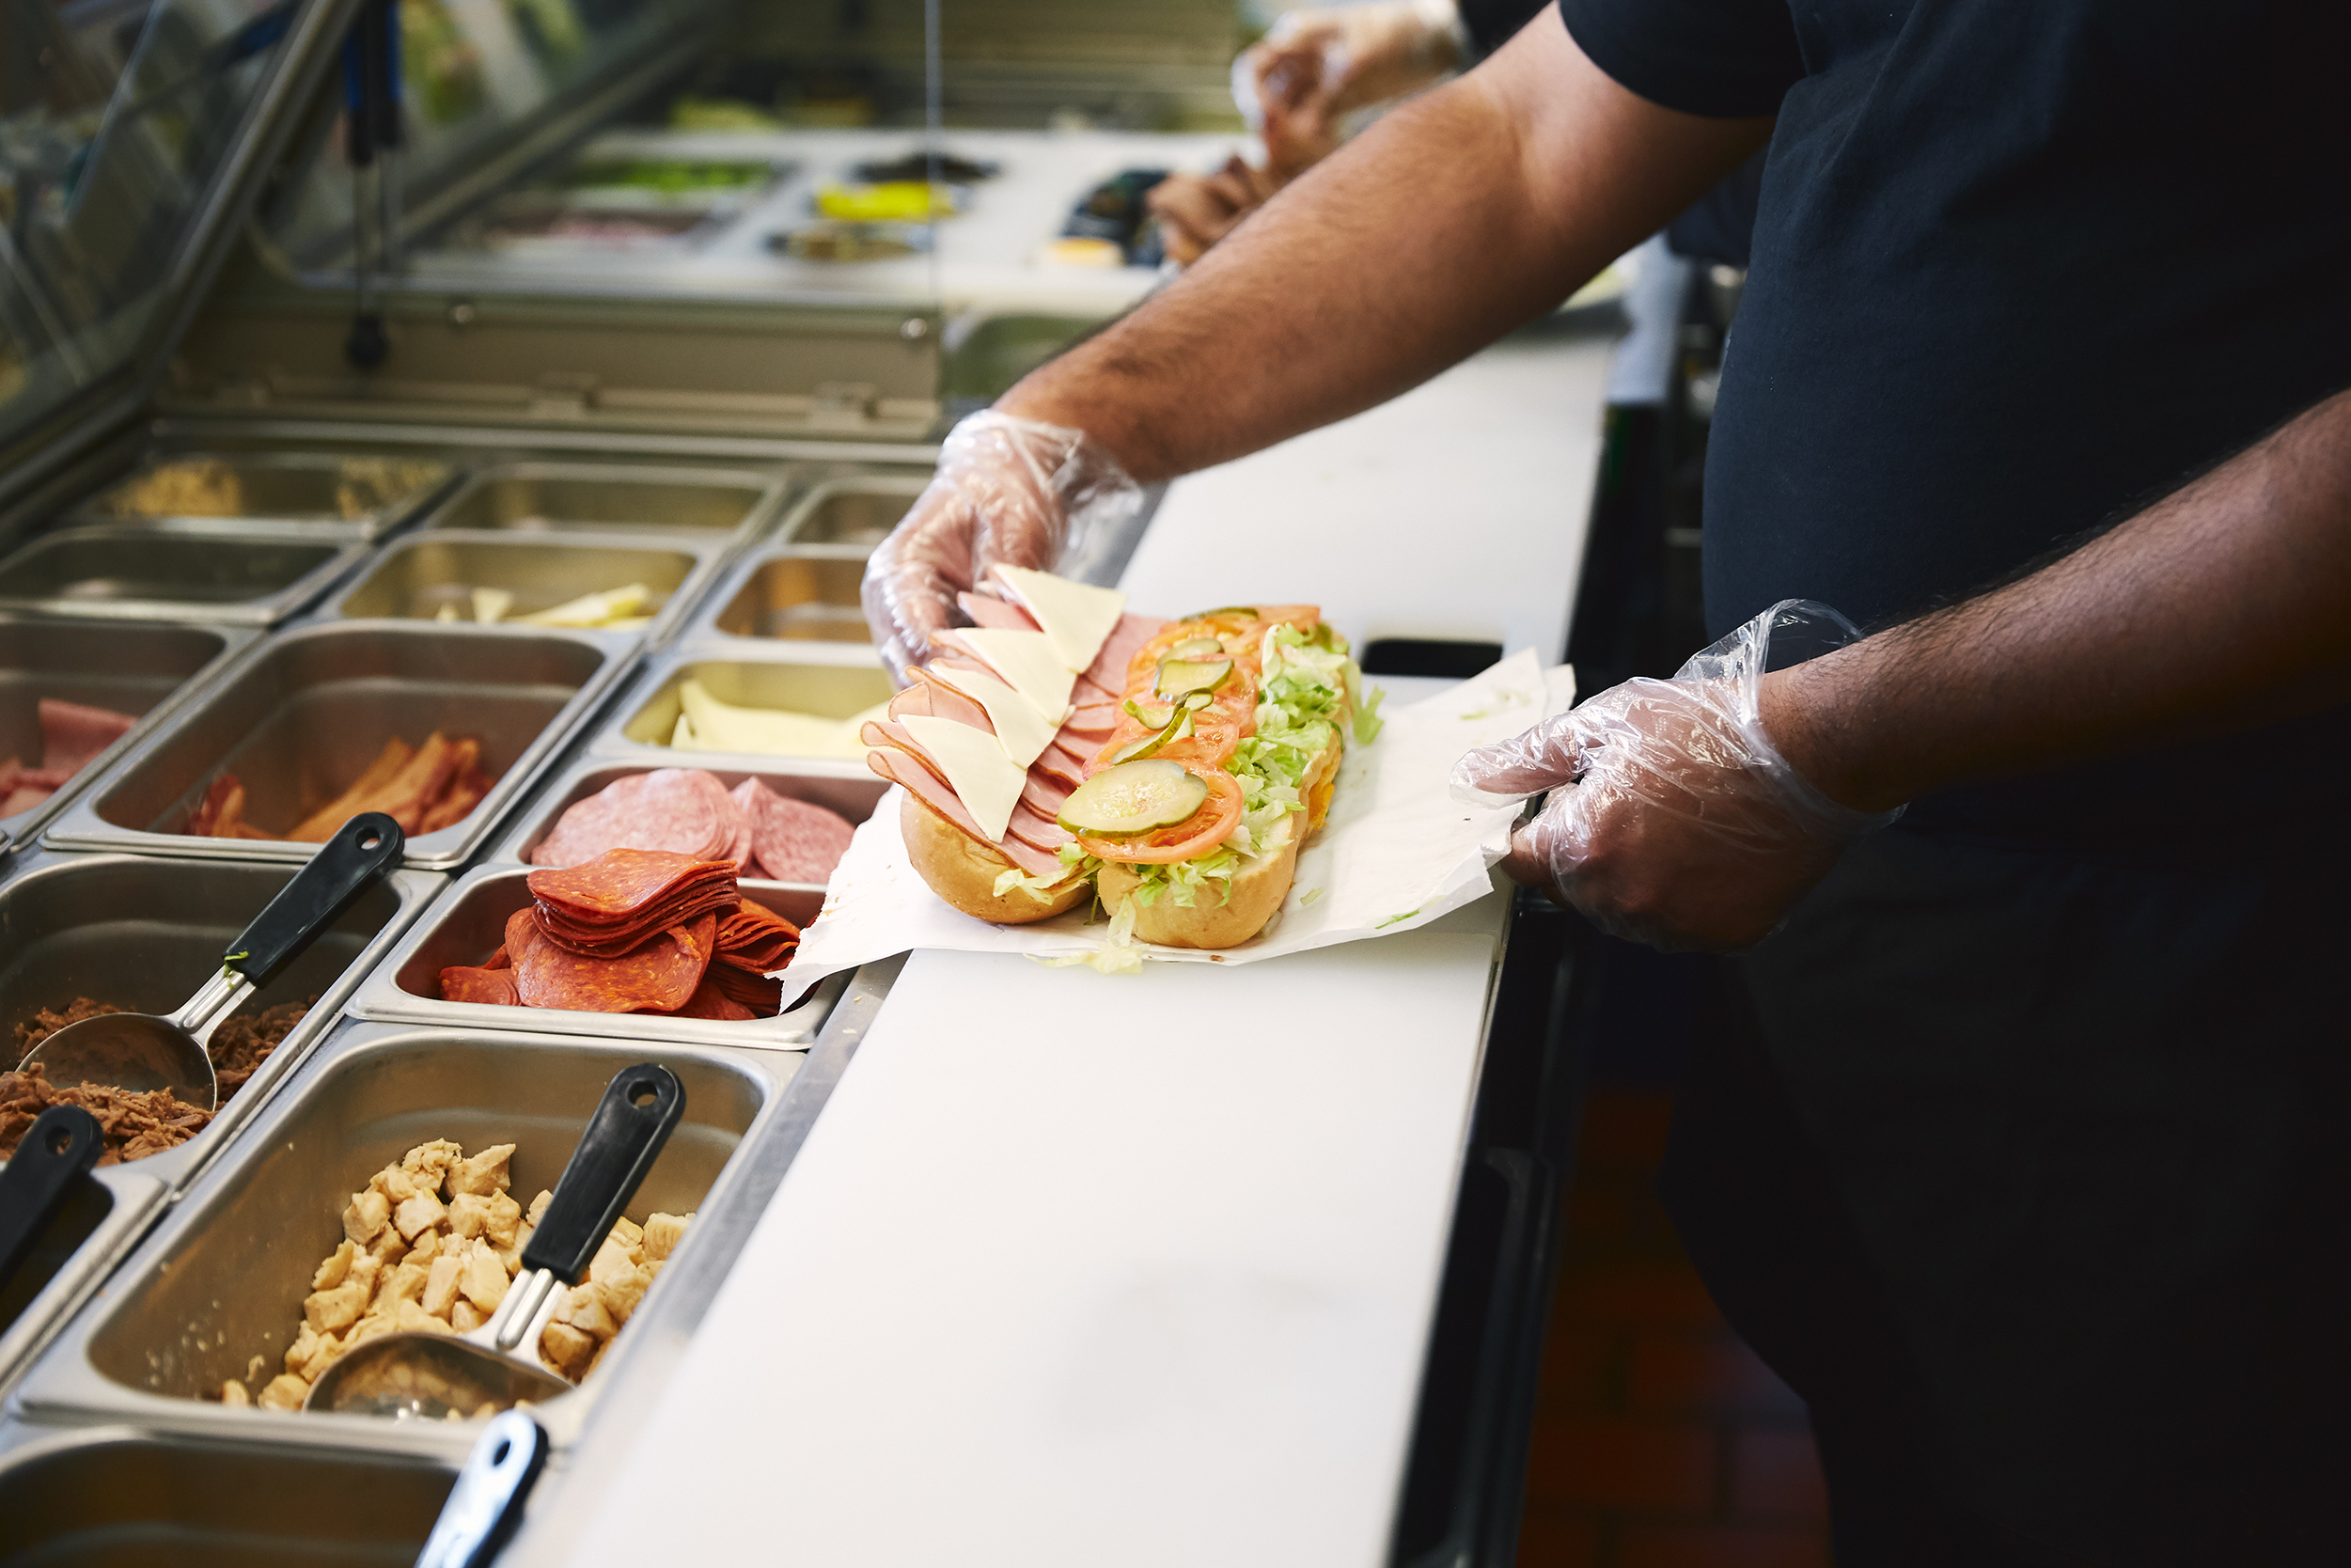 preparing sandwich in the fast food restaurant.